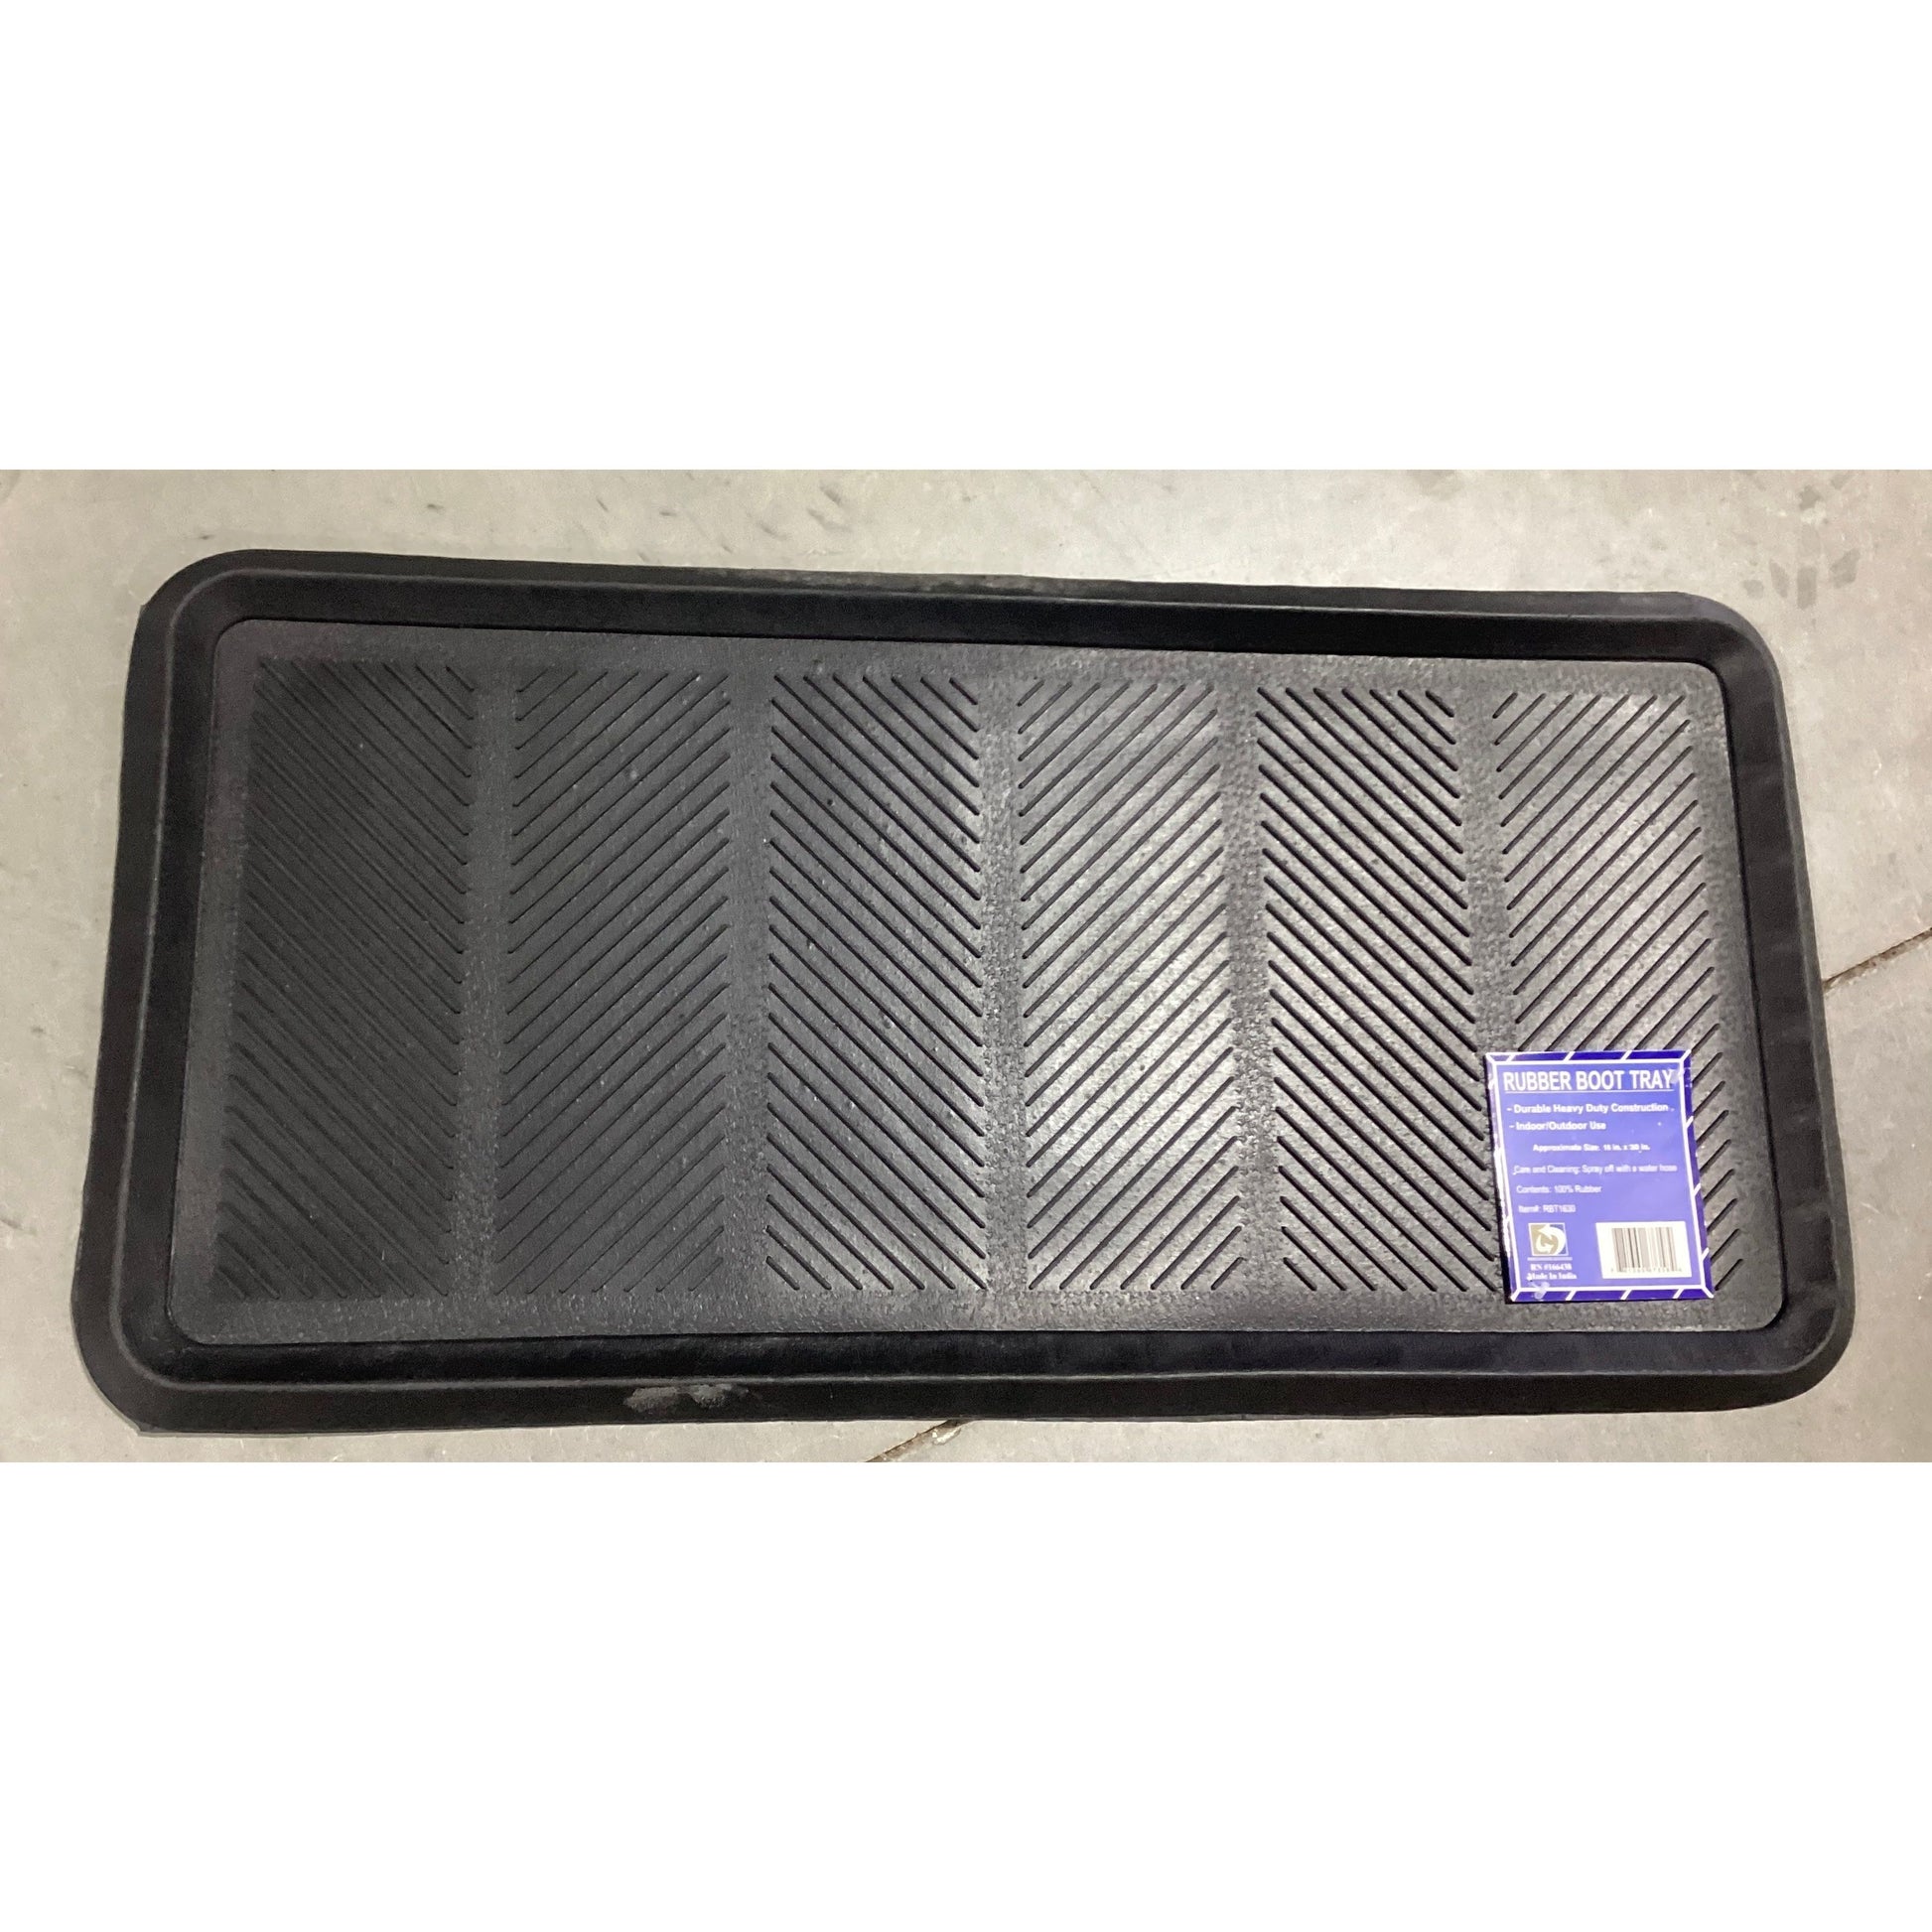 A black plastic boot tray